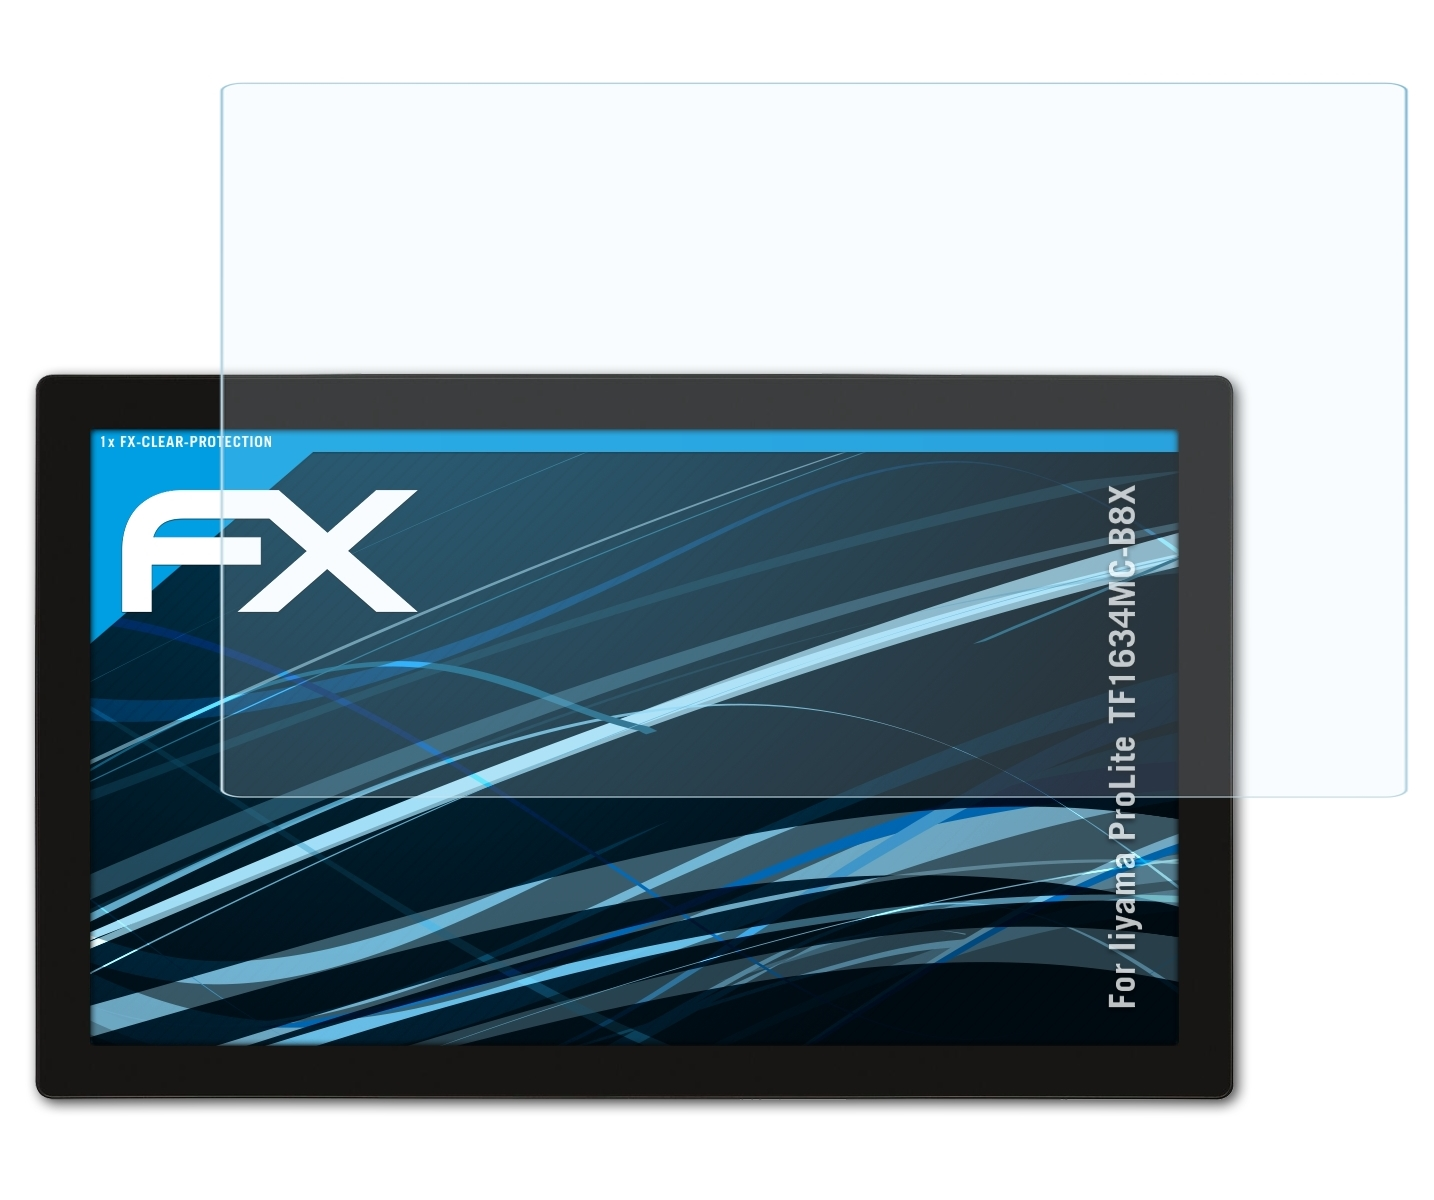 ATFOLIX FX-Clear Displayschutz(für ProLite Iiyama TF1634MC-B8X)